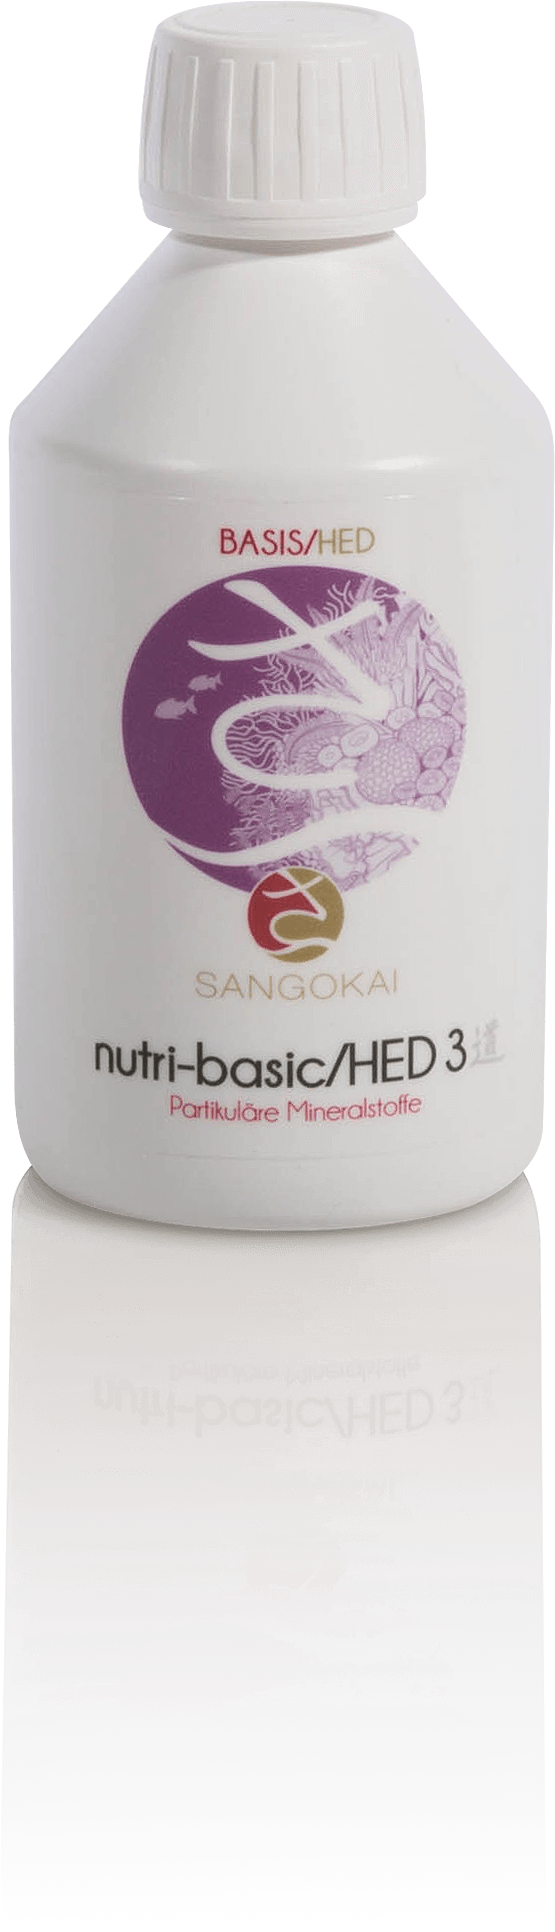 Sango nutri-basic/ HED  # 3  250 ml Sangokai